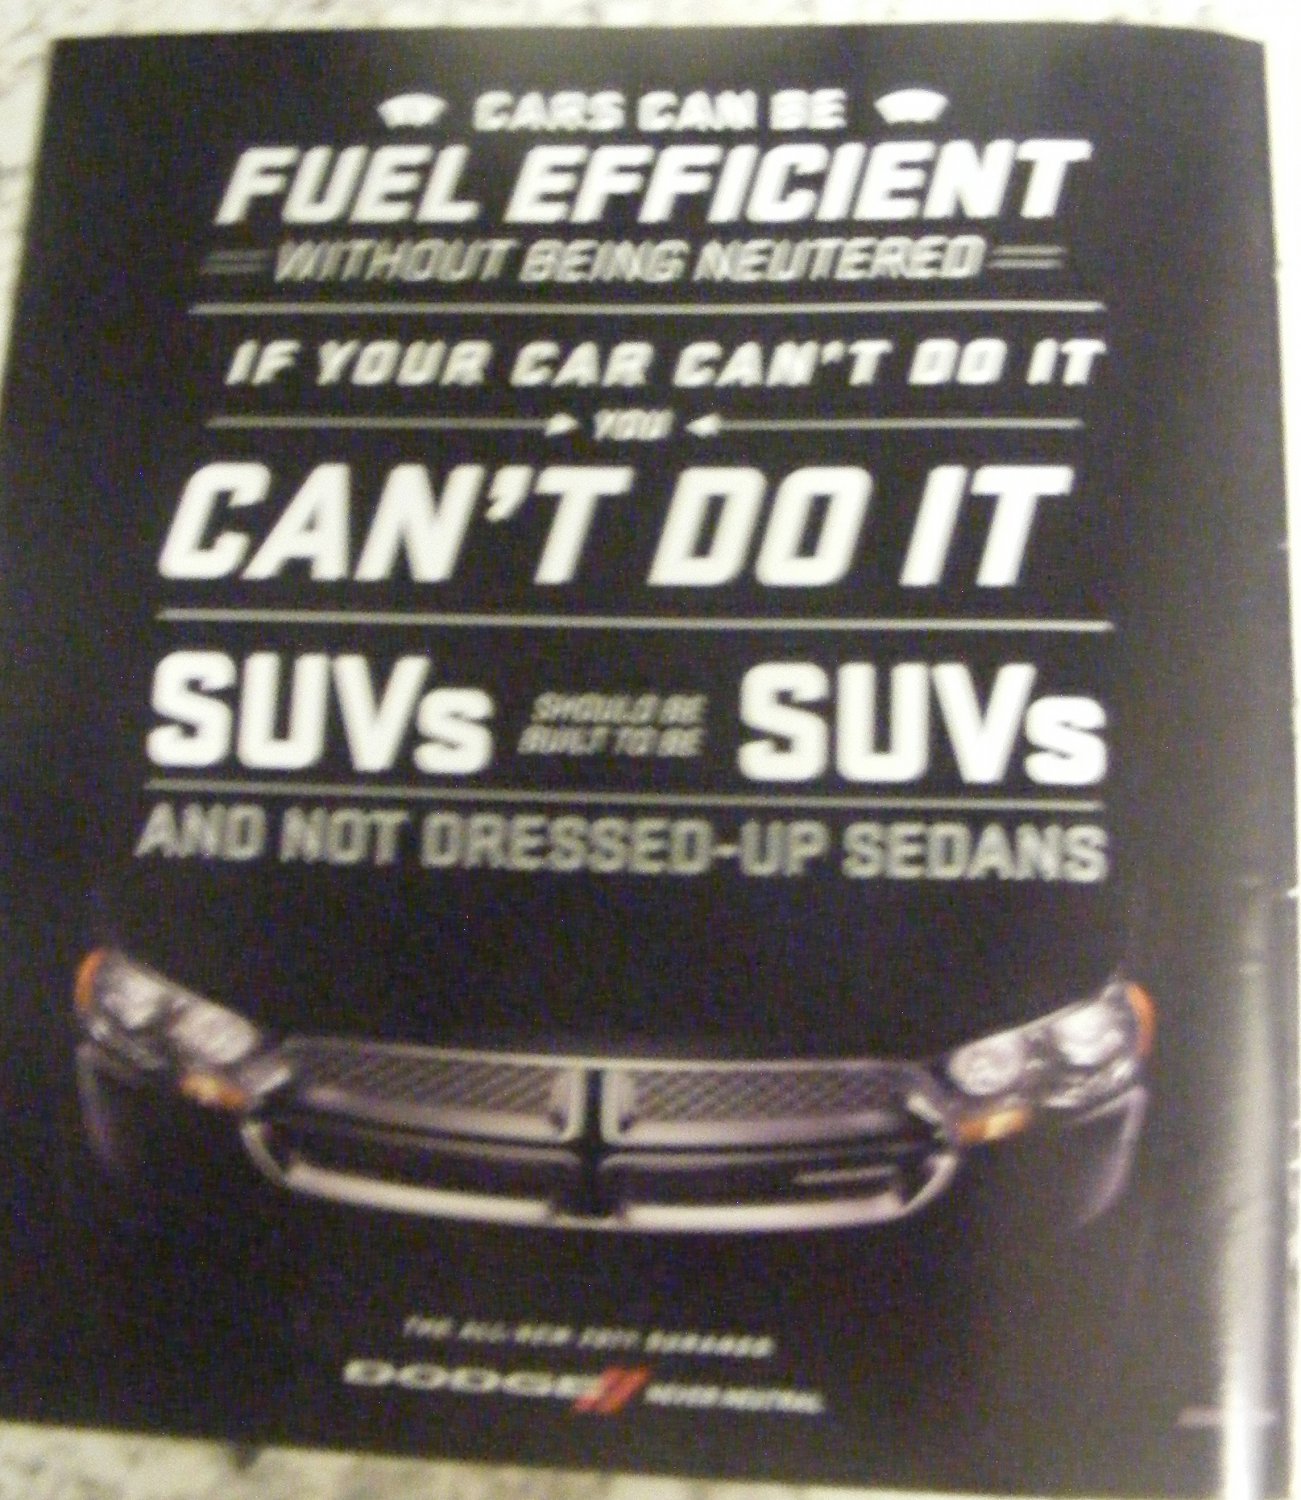 Dodge Durango SUV print advertisement